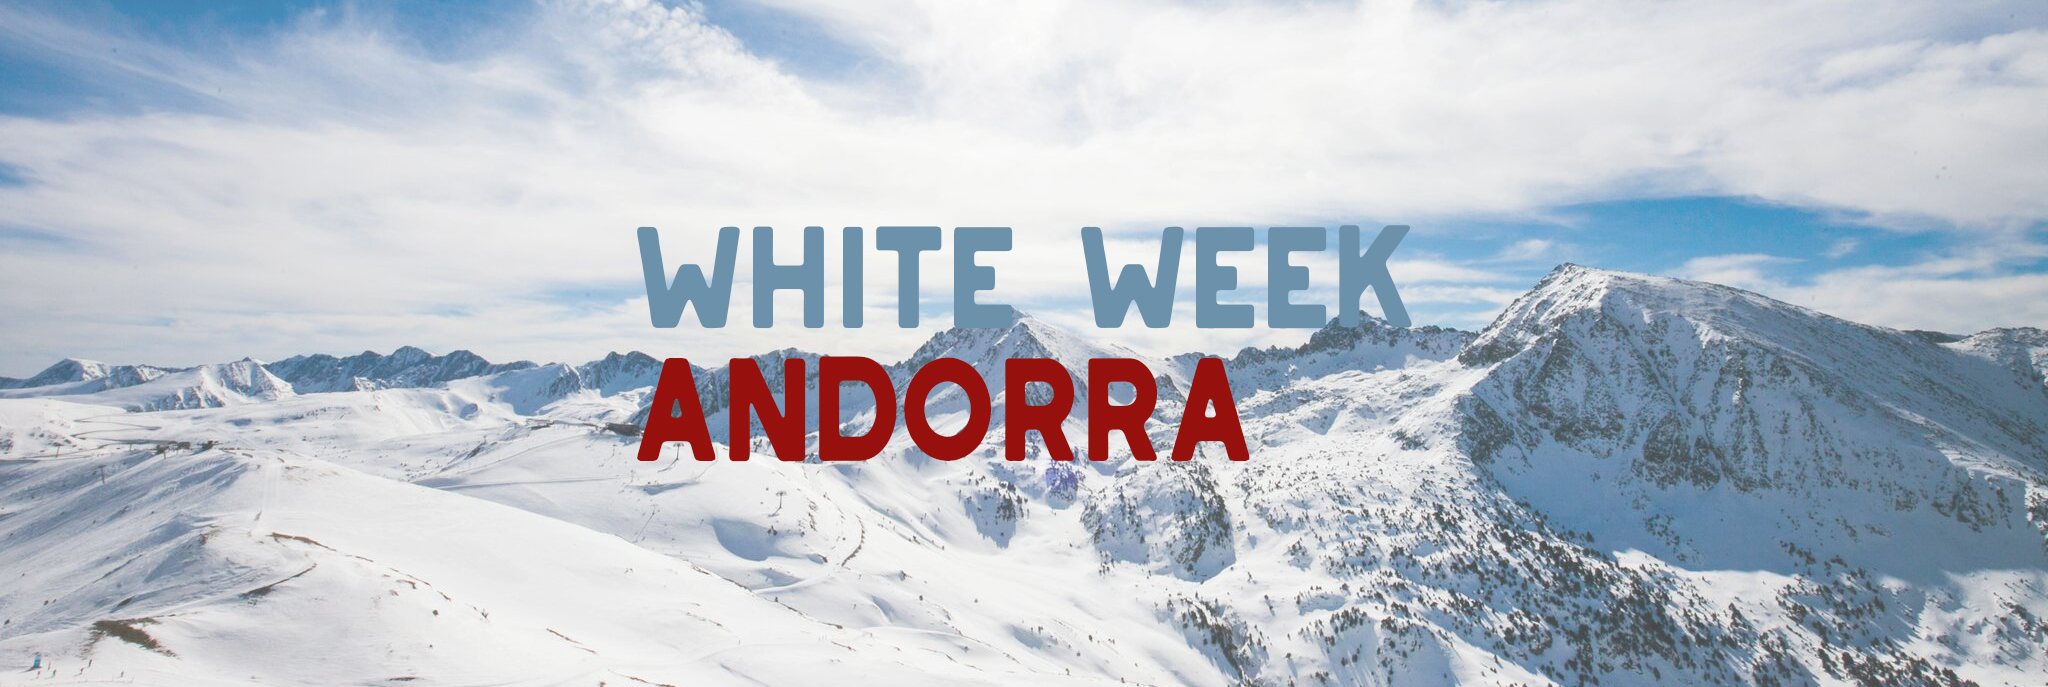 white-week-andorra